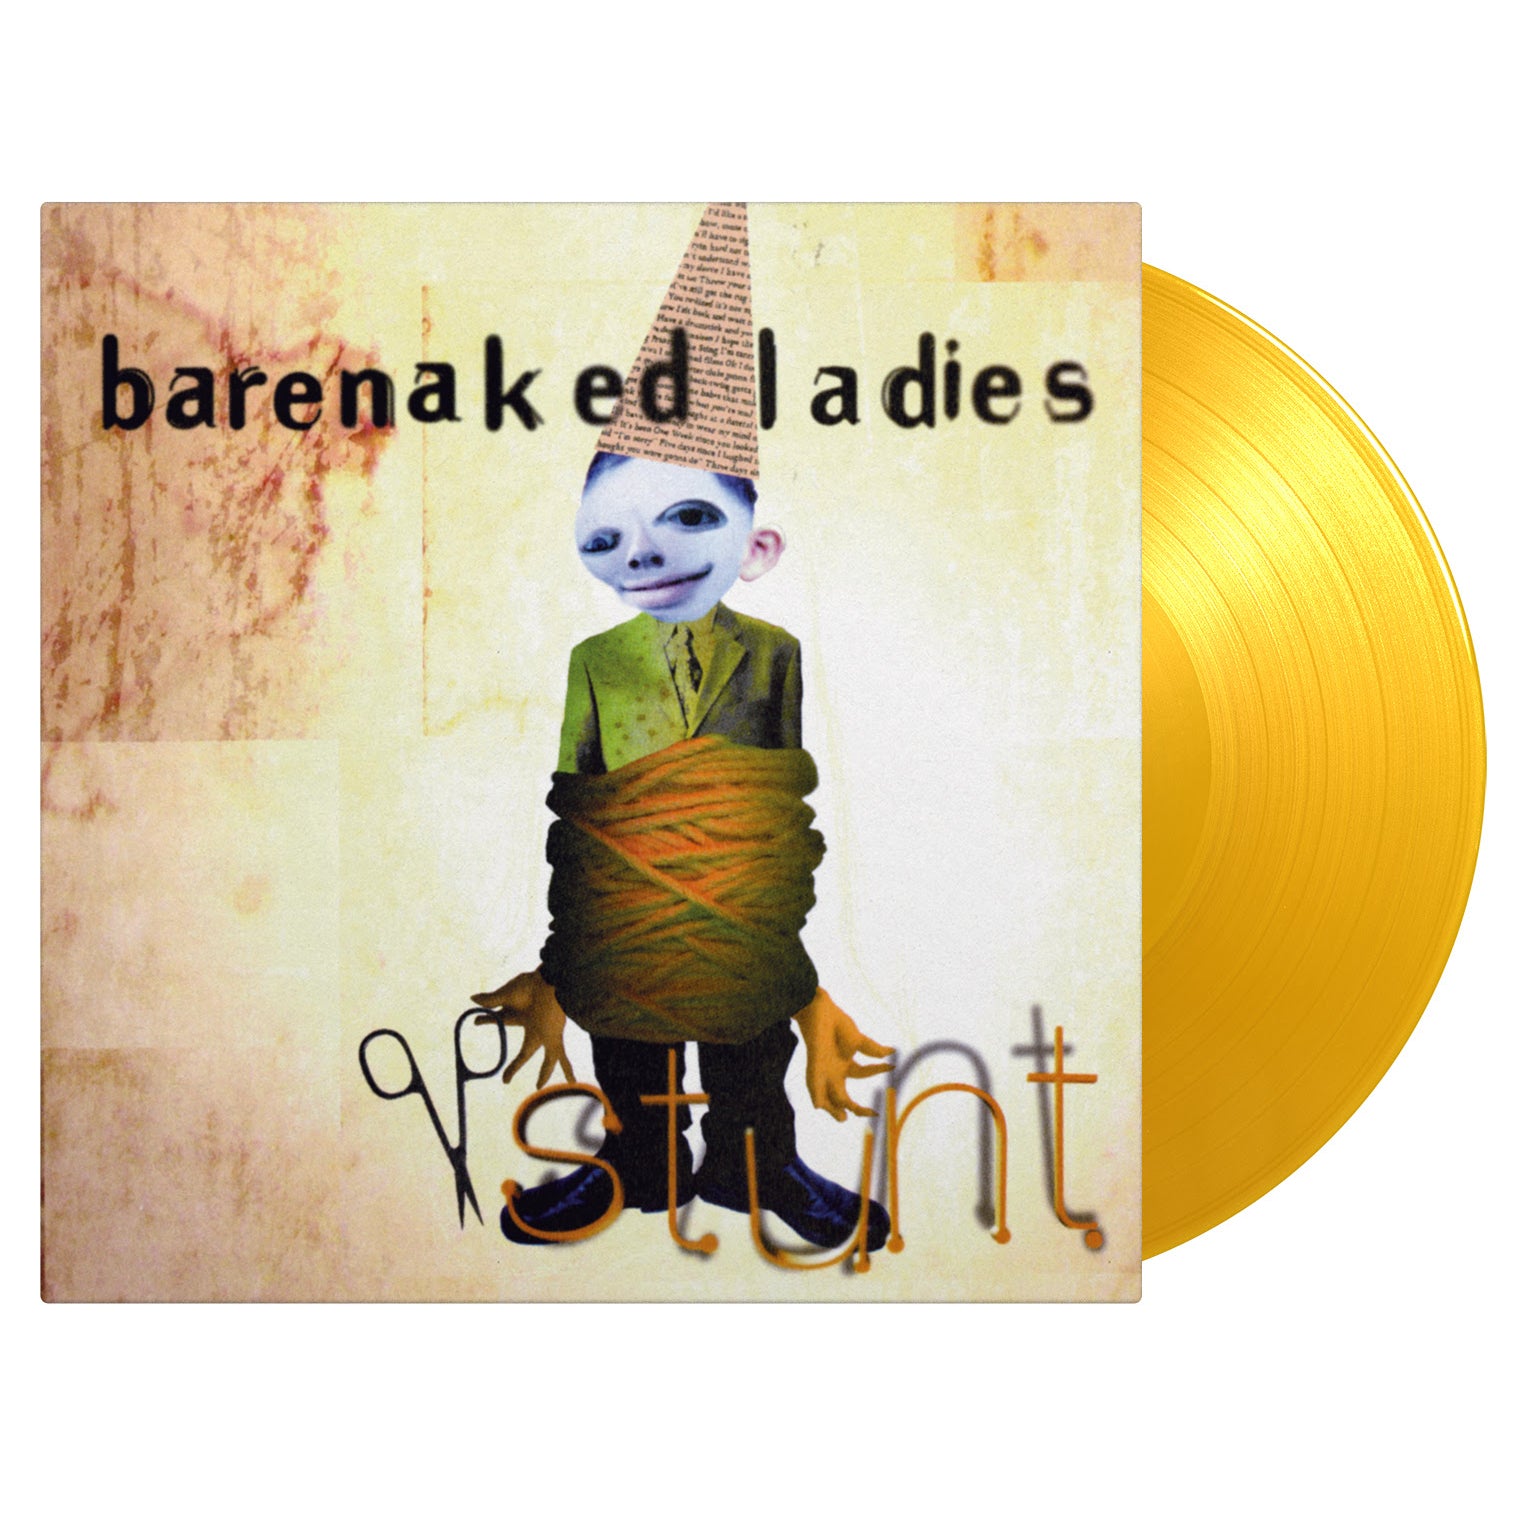 BARENAKED LADIES - Stunt - LP - 180g Translucent Yellow Vinyl